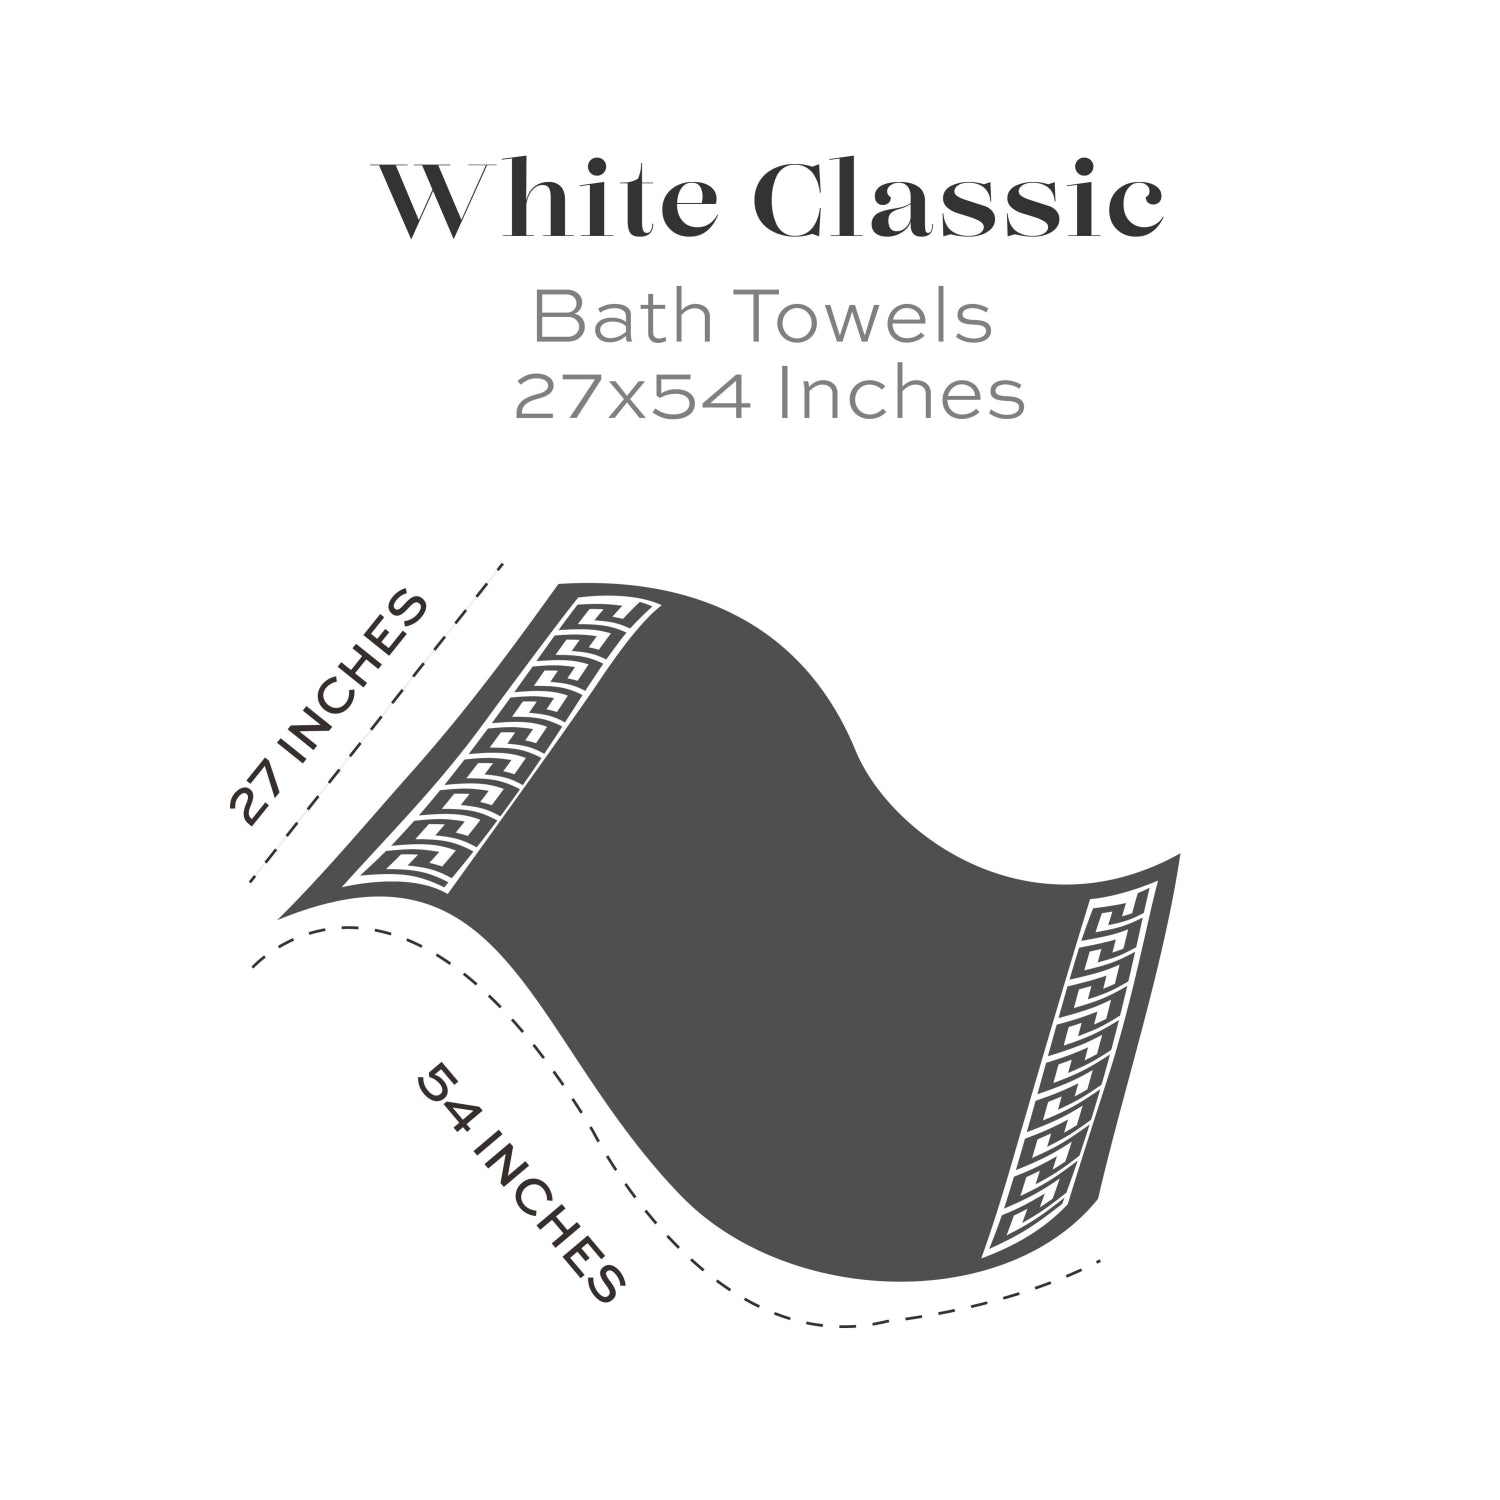 27x54 inches bath towel